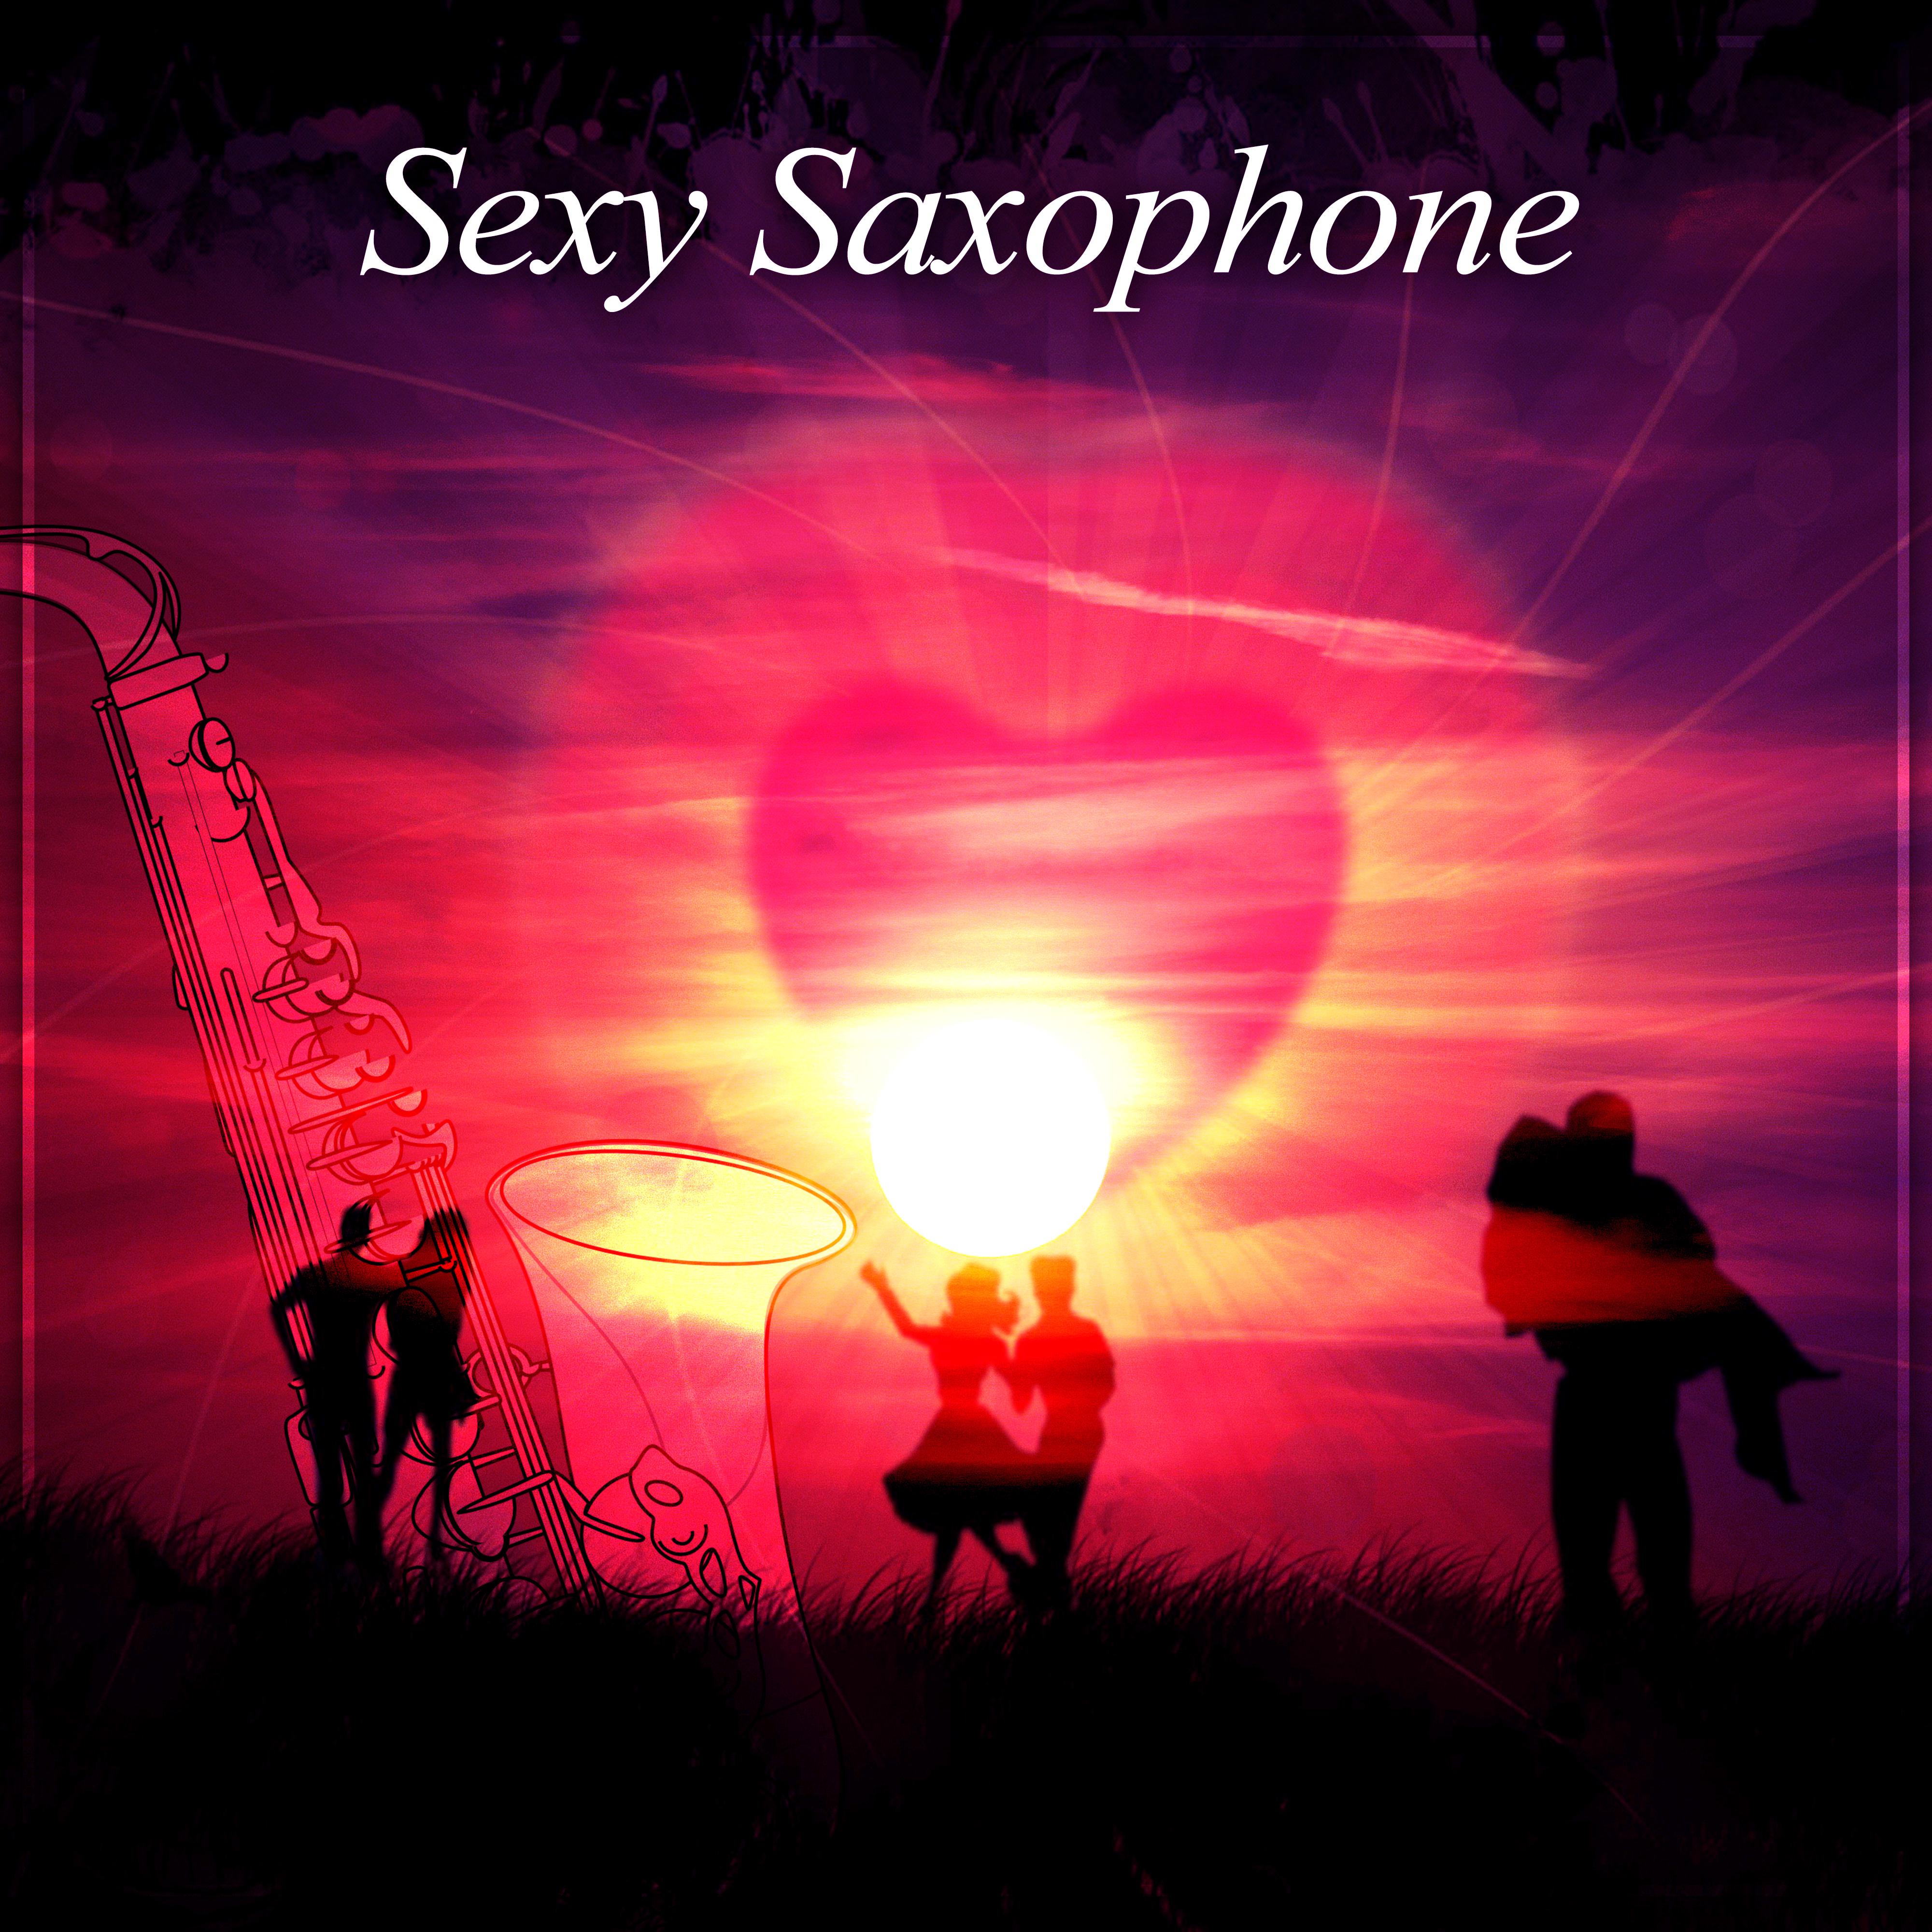 **** Saxophone – Saxophone Jazz Music for Making Love and Sensual Massage, Romantic Music, Lounge Jazz, Sensual Smooth Jazz Sounds